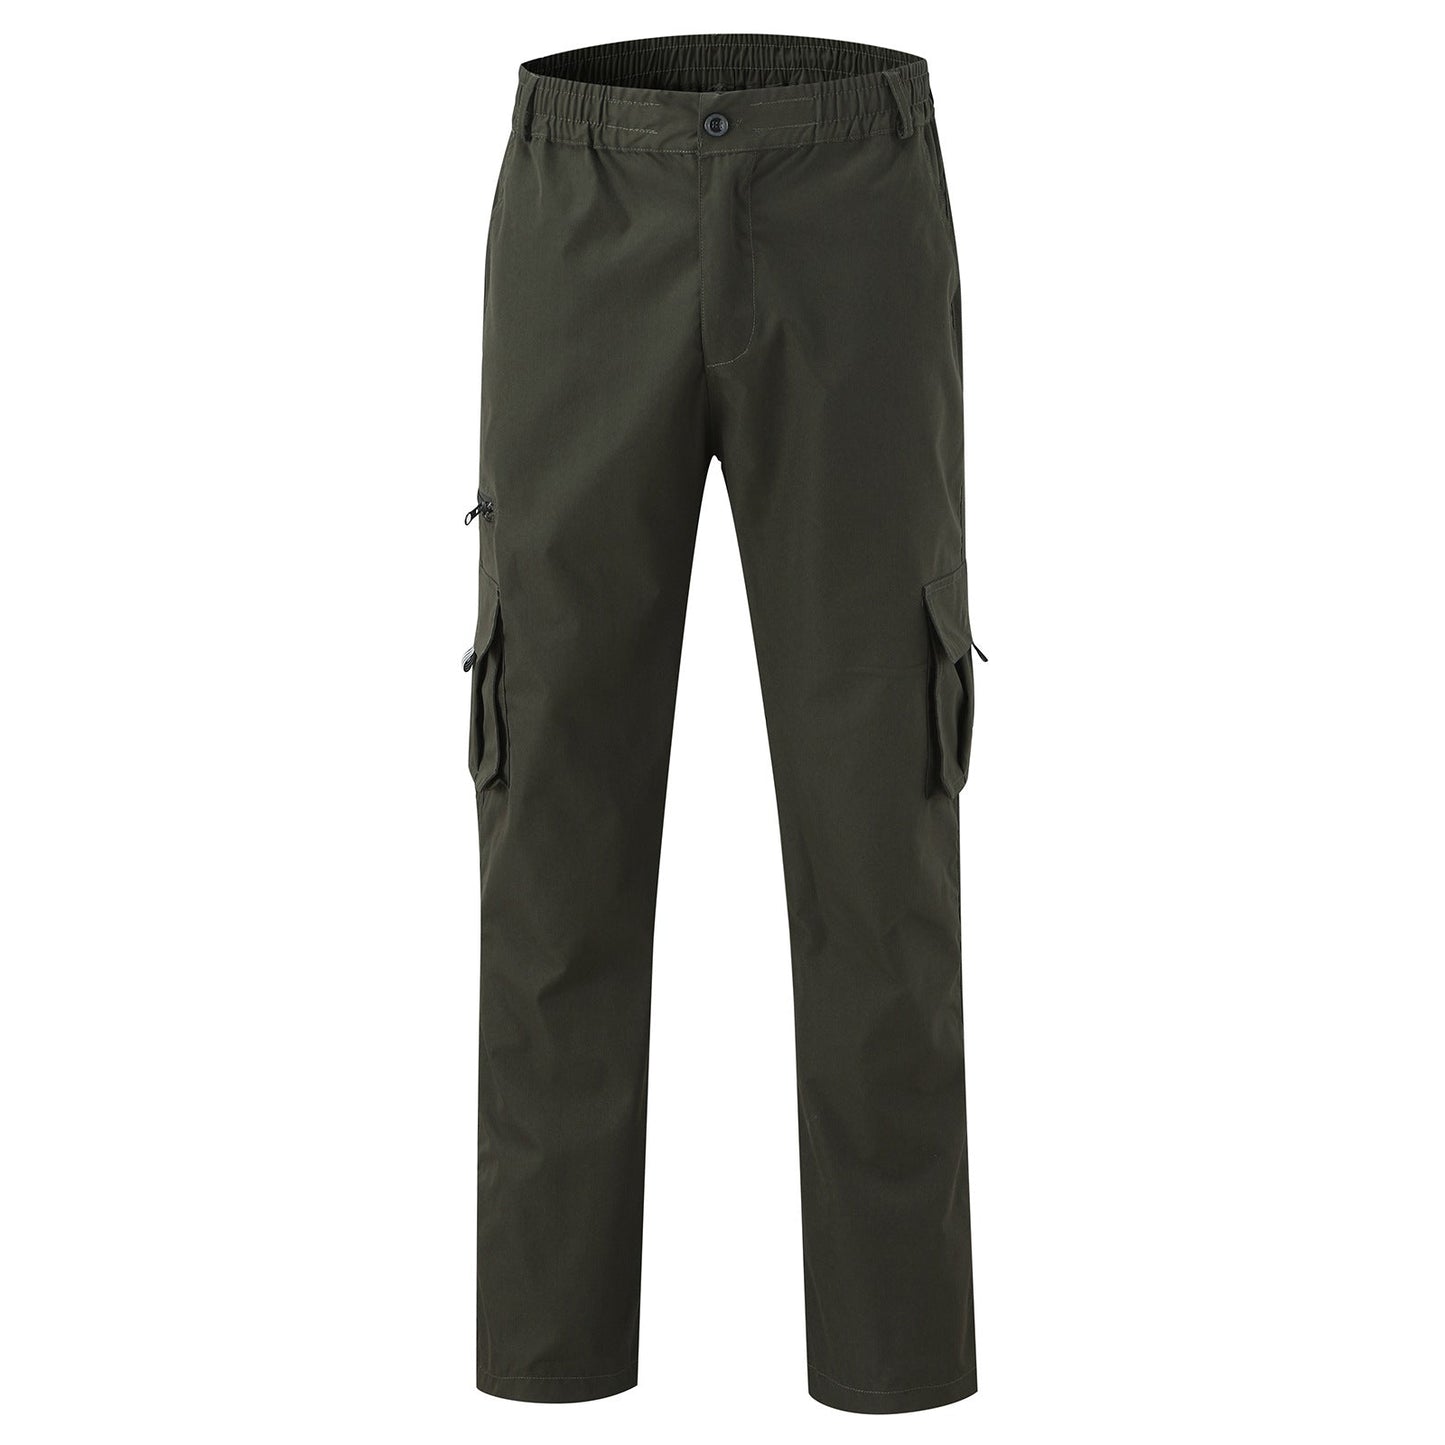 Casual Pockets Men's Outdoor Pants-Pants-Army Green-S-Free Shipping at meselling99